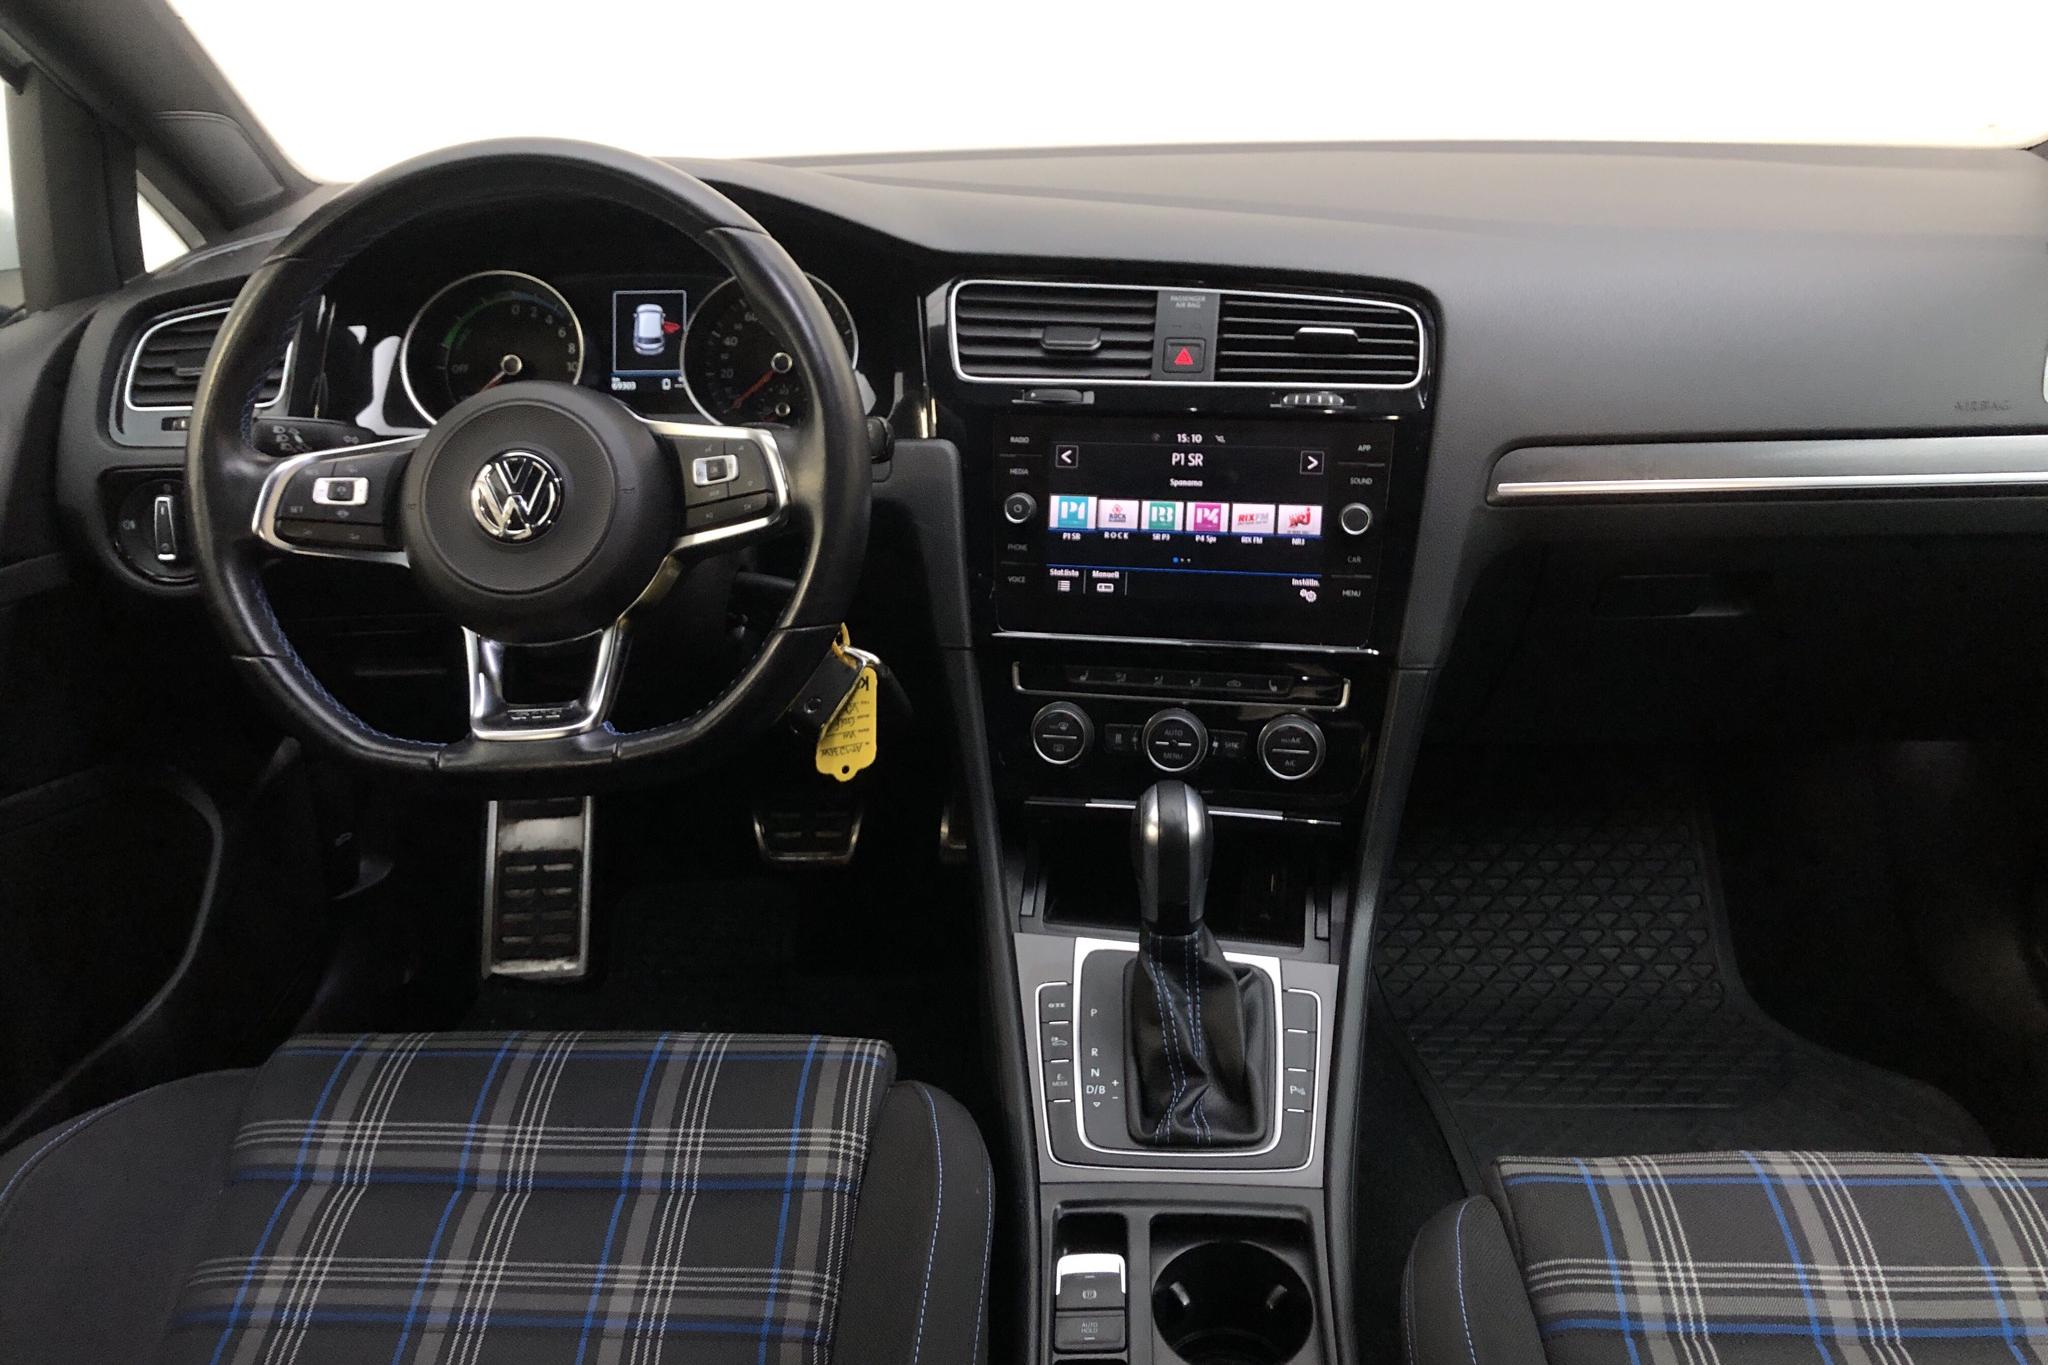 VW Golf VII GTE 5dr (204hk) - 69 290 km - Automatic - white - 2020